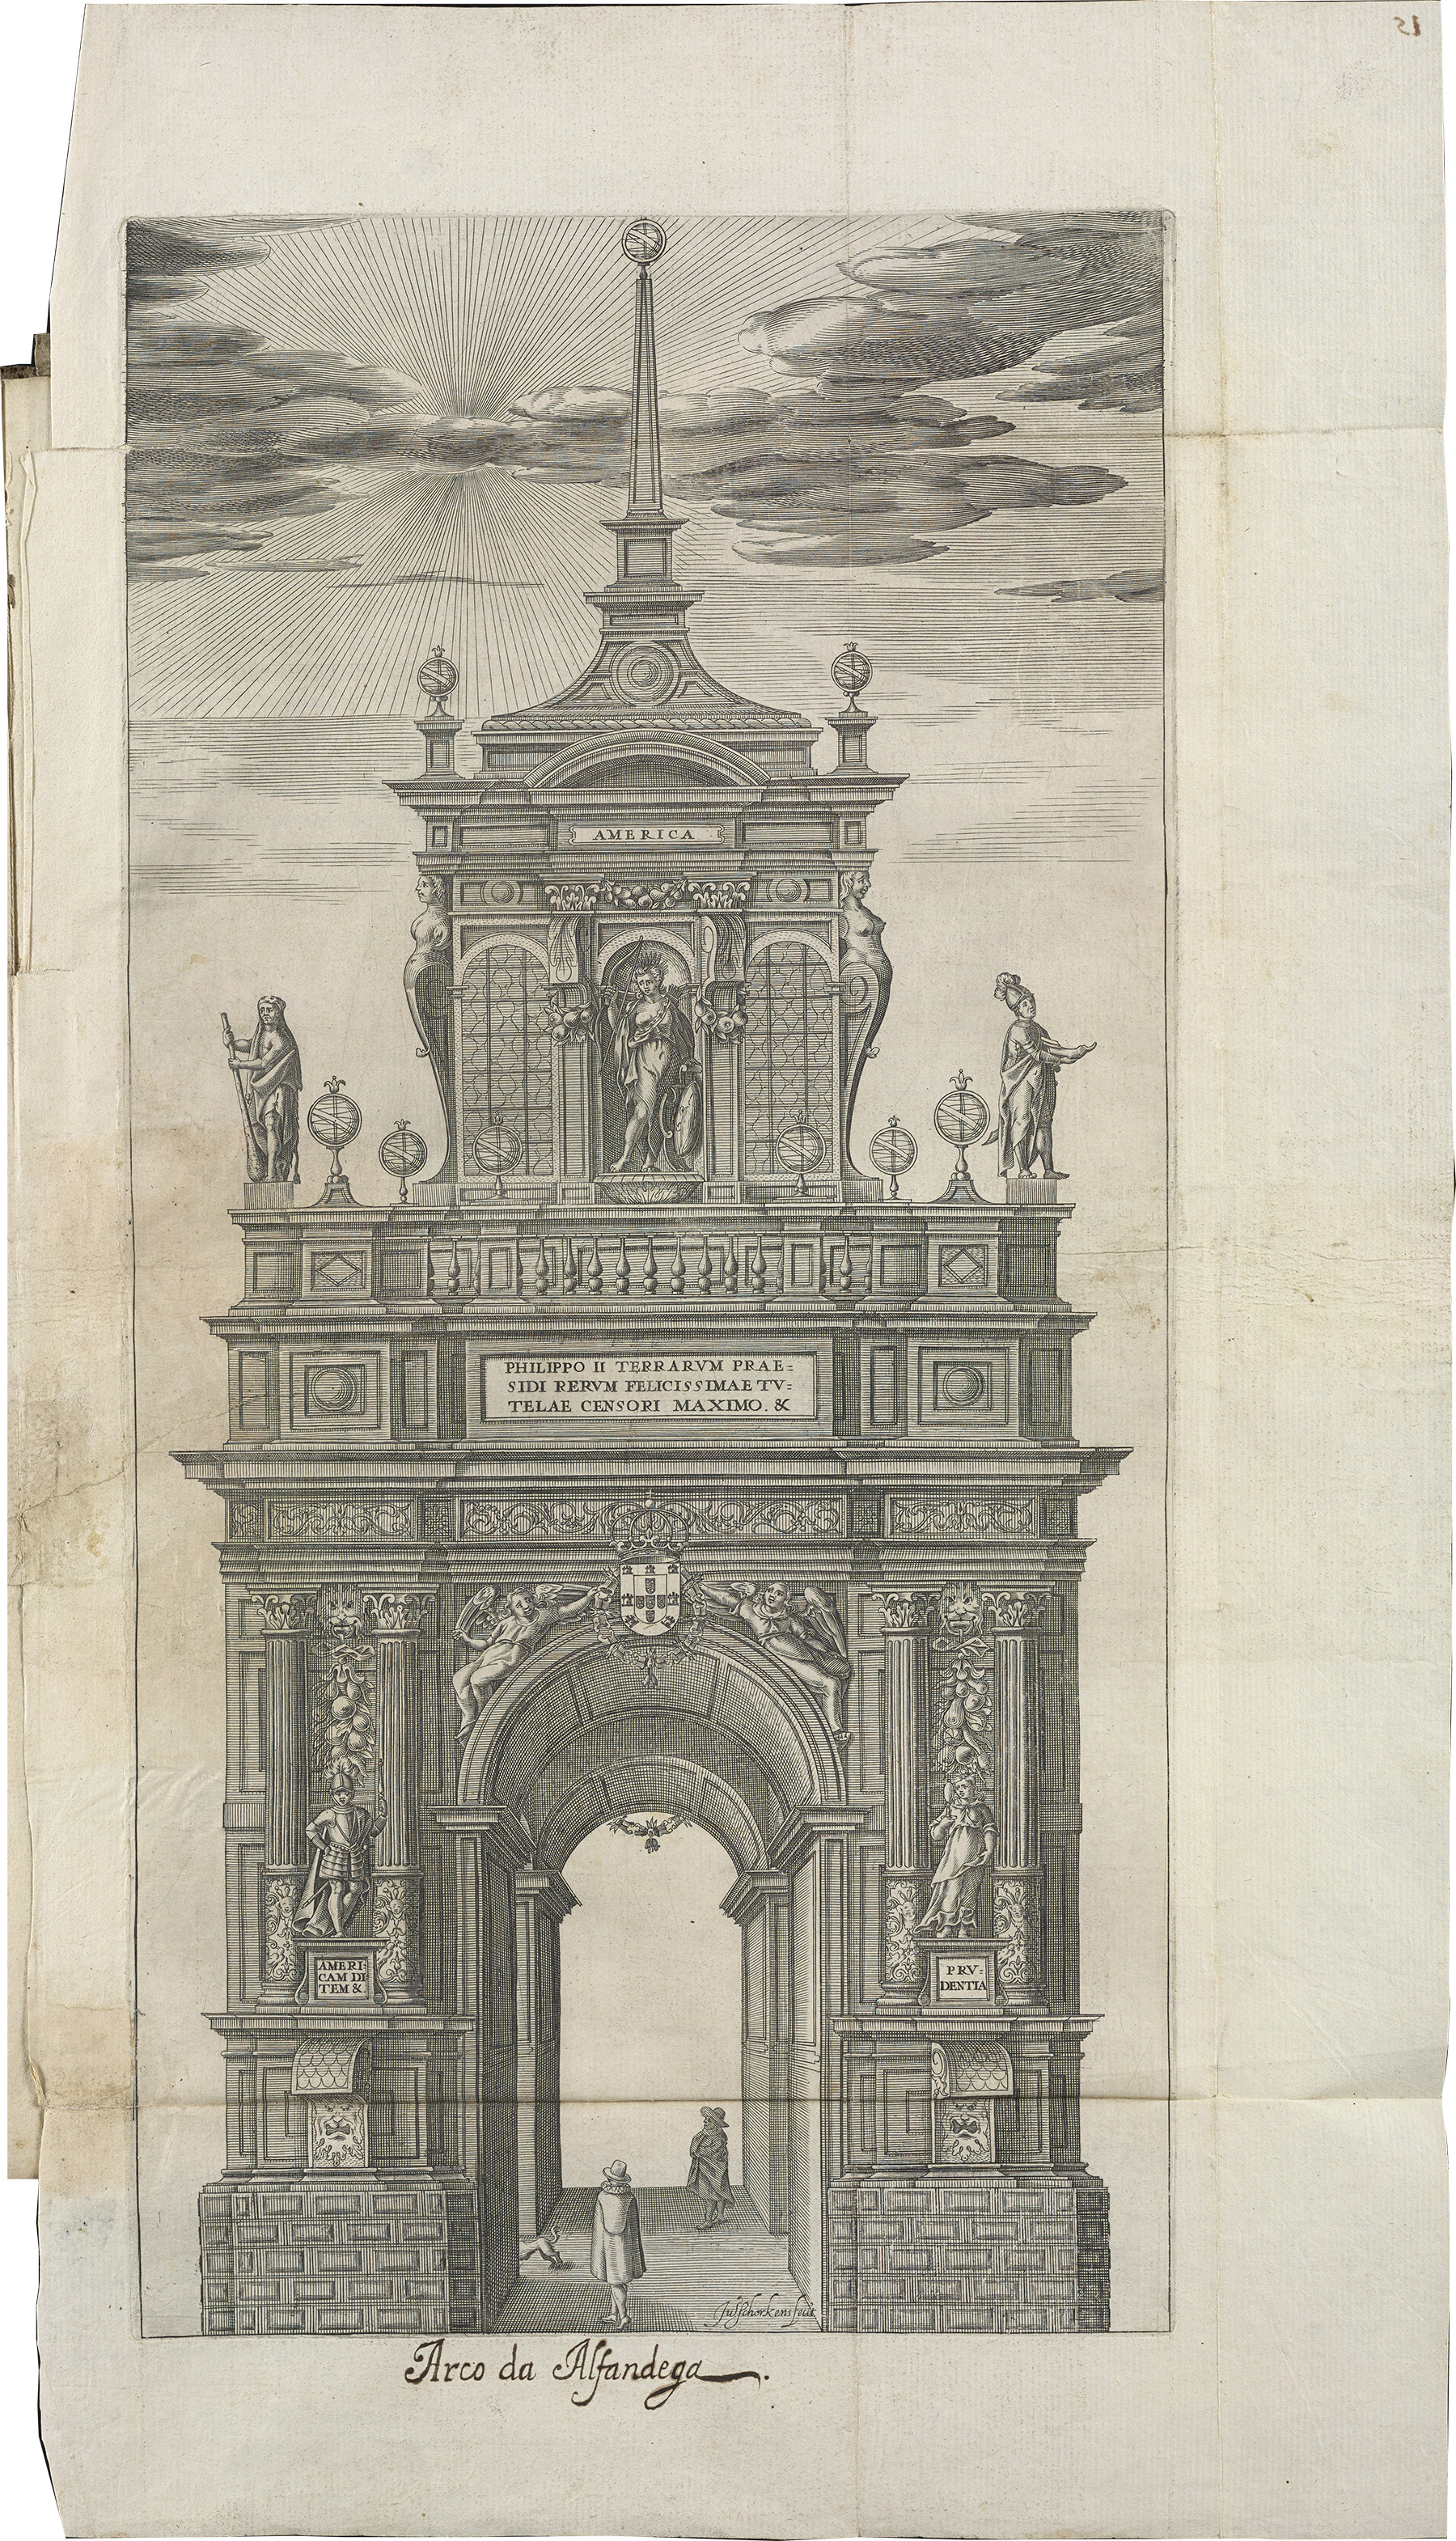 Arch with inscription in the bottom margin that reads "Arco da Alfandega"